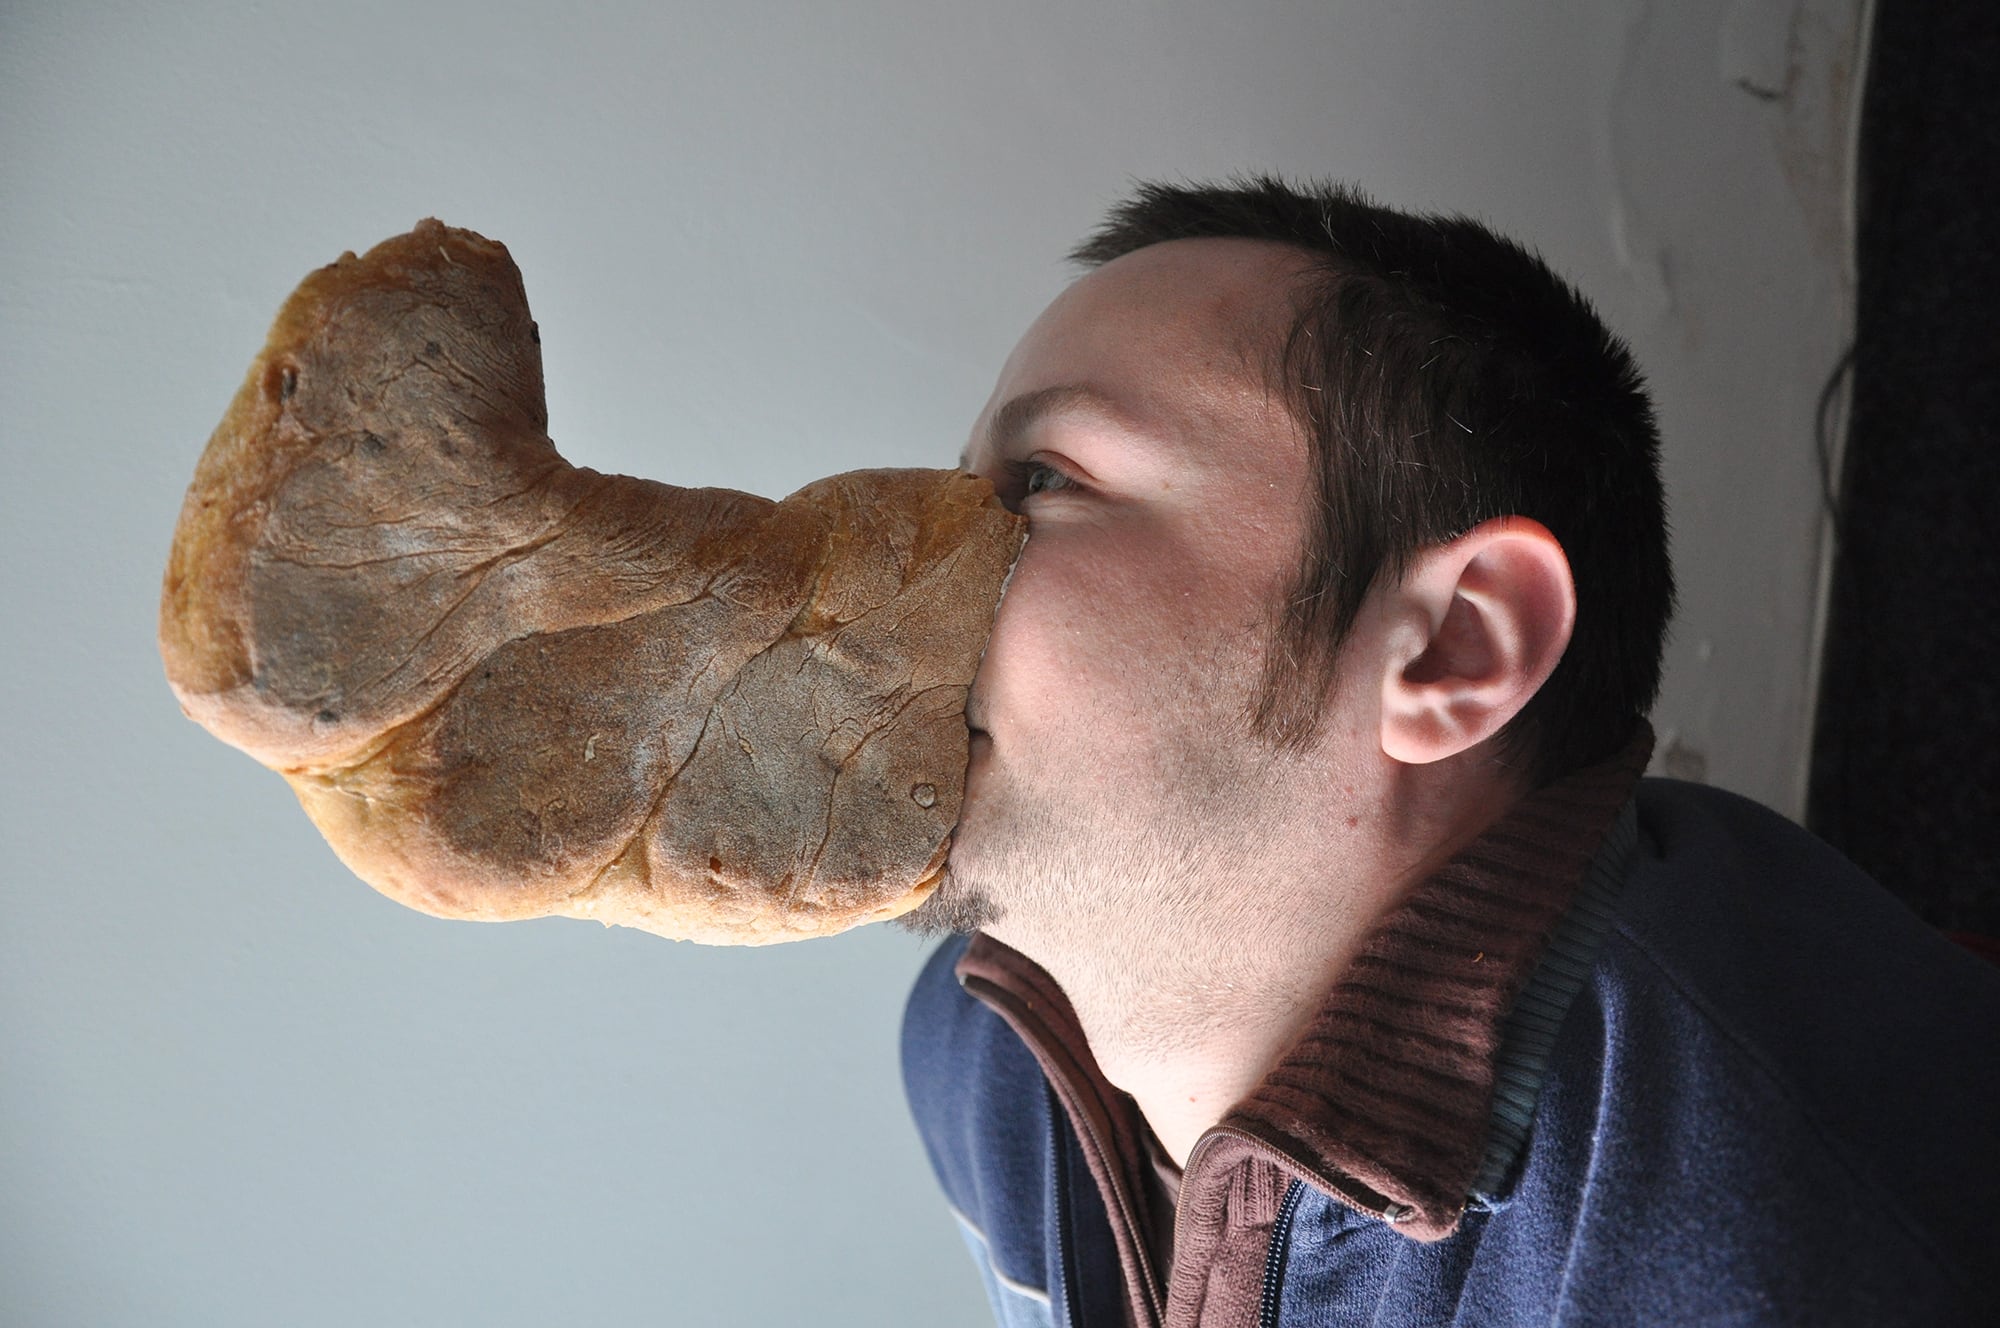 Vetró Barnabás with a curved bread on his face